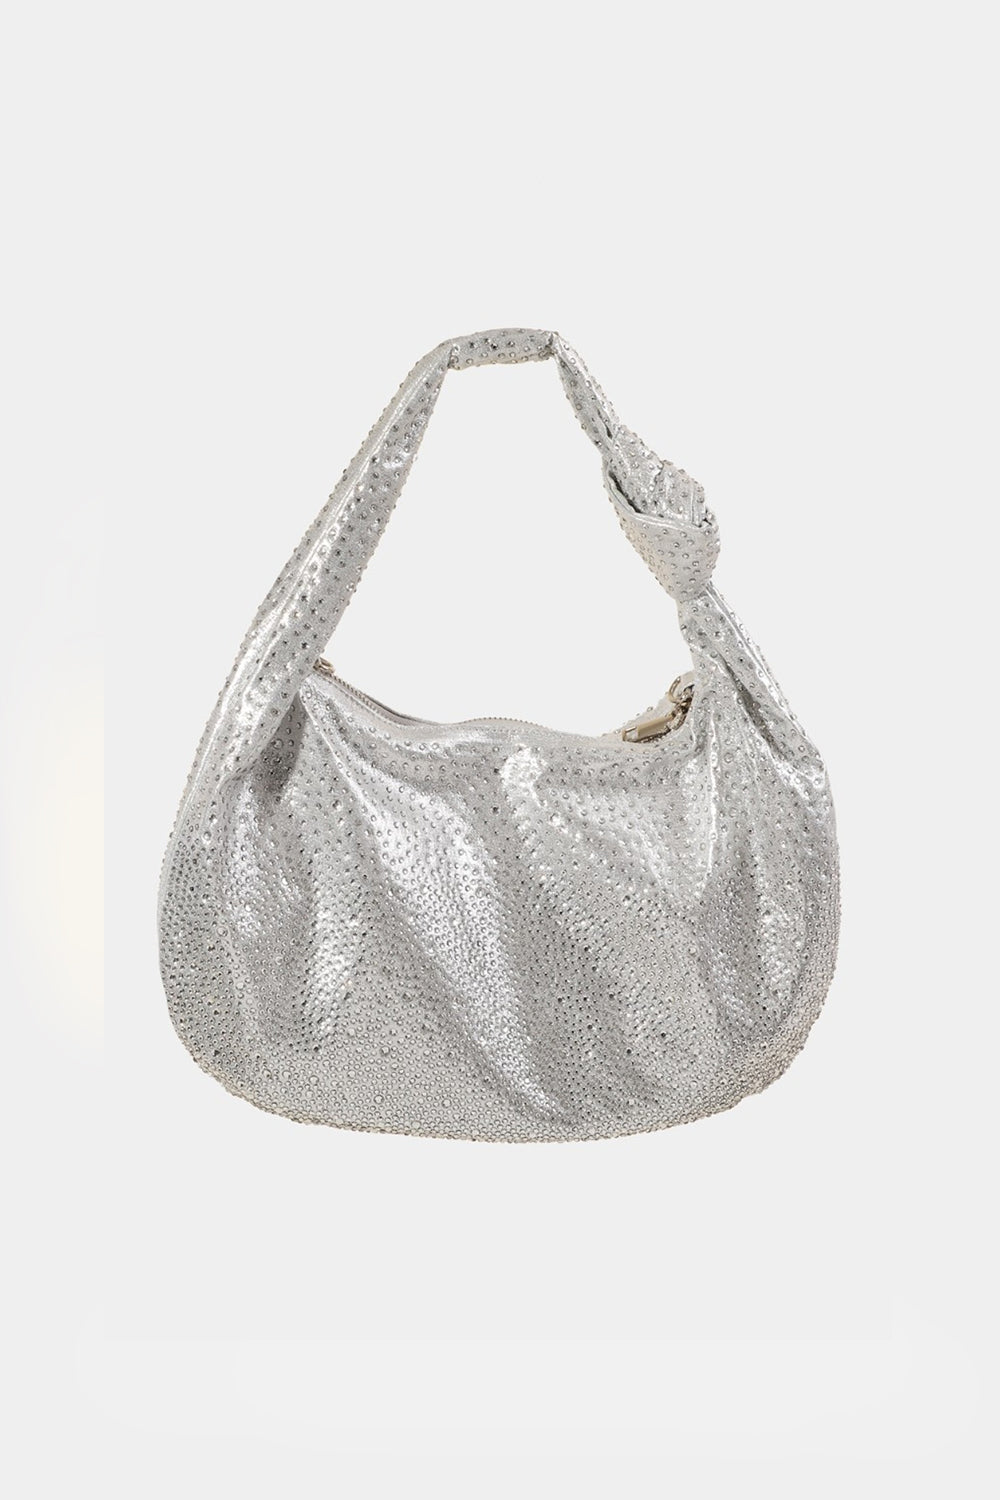 TEEK - Rhinestone Studded Handbag BAG TEEK Trend Silver One Size 